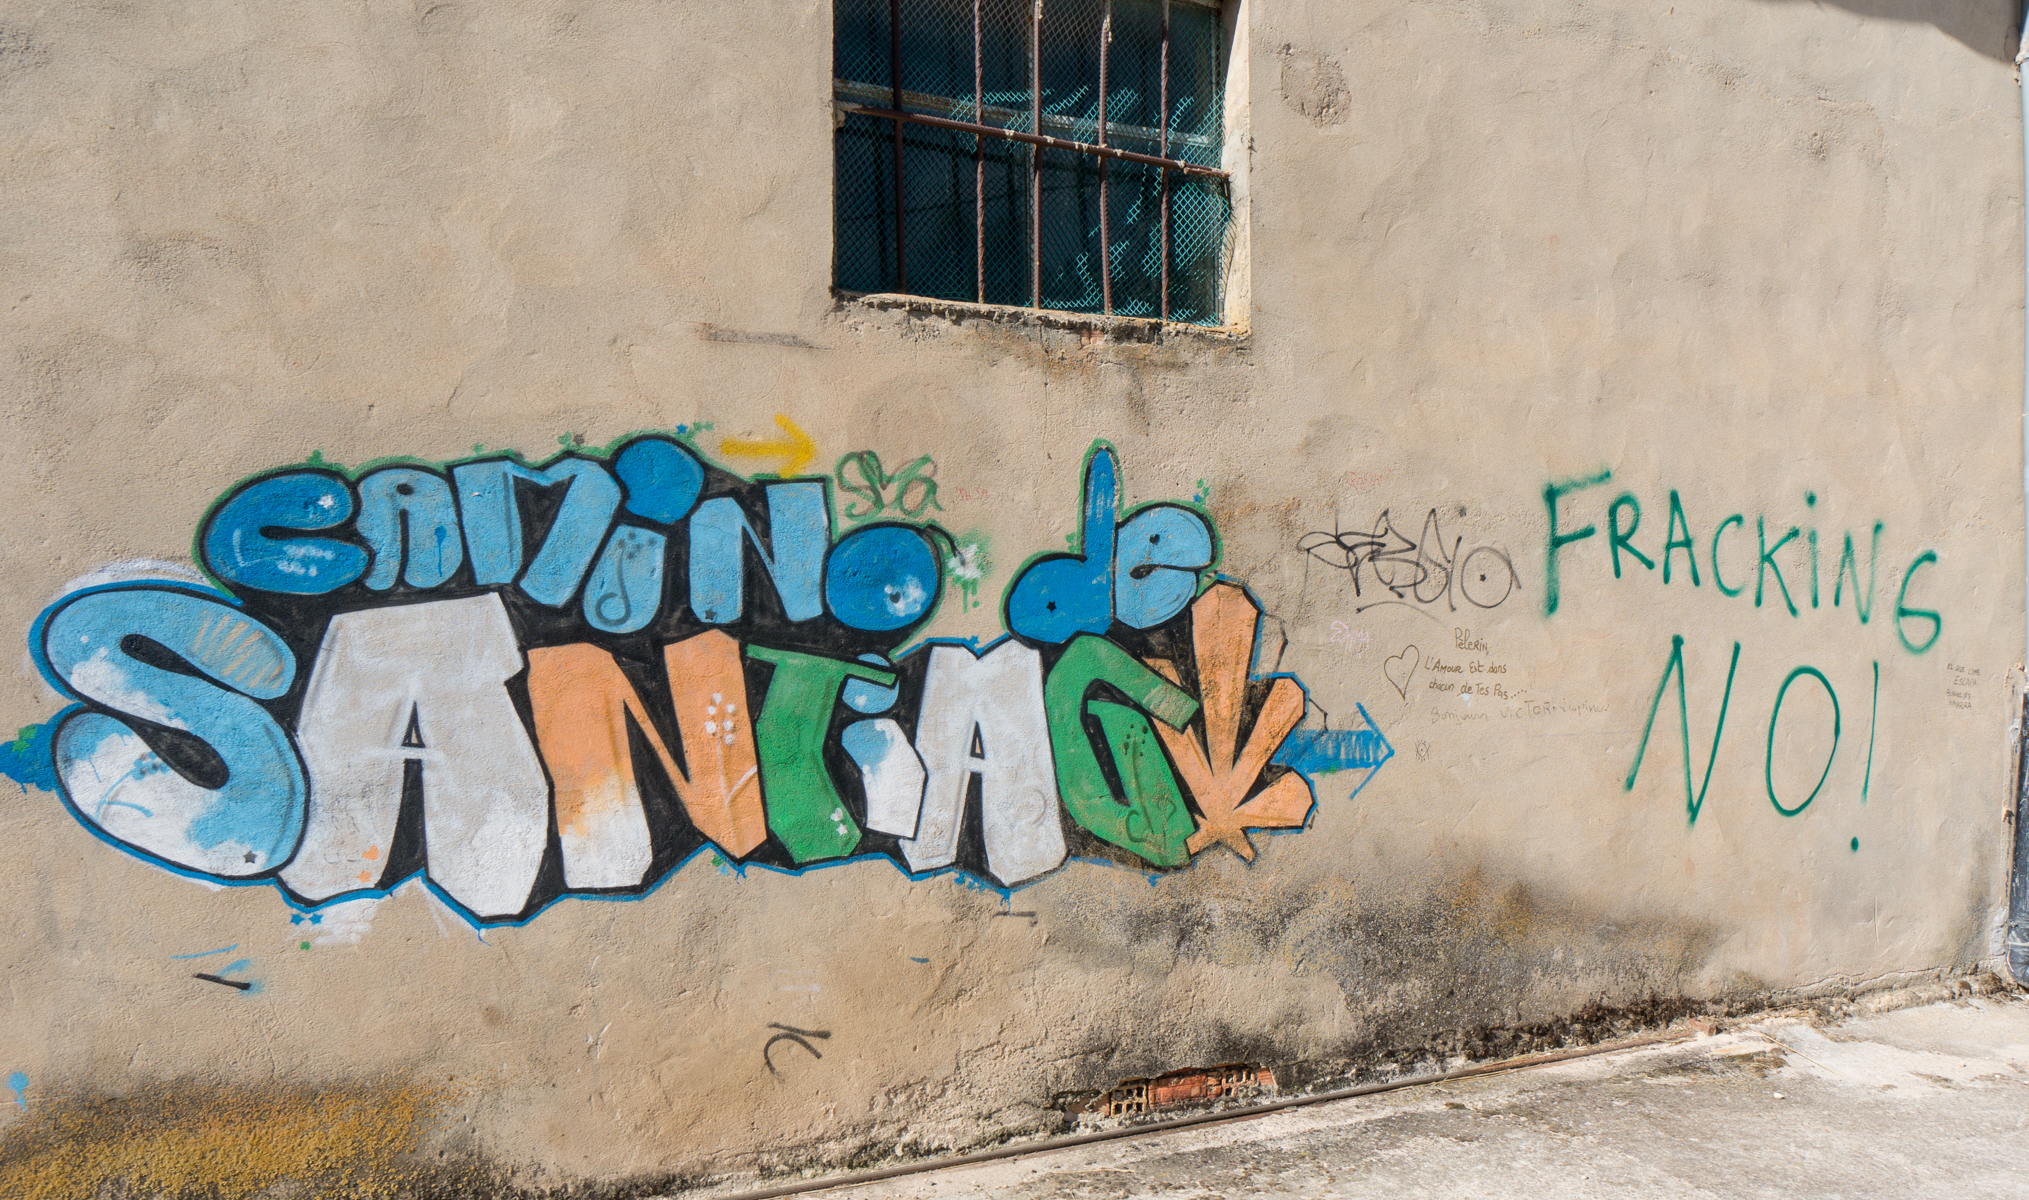 Anti-fracking graffiti along the Camino Francés in Rabé de las Calzados, Spain | Photo by Mike Hudak